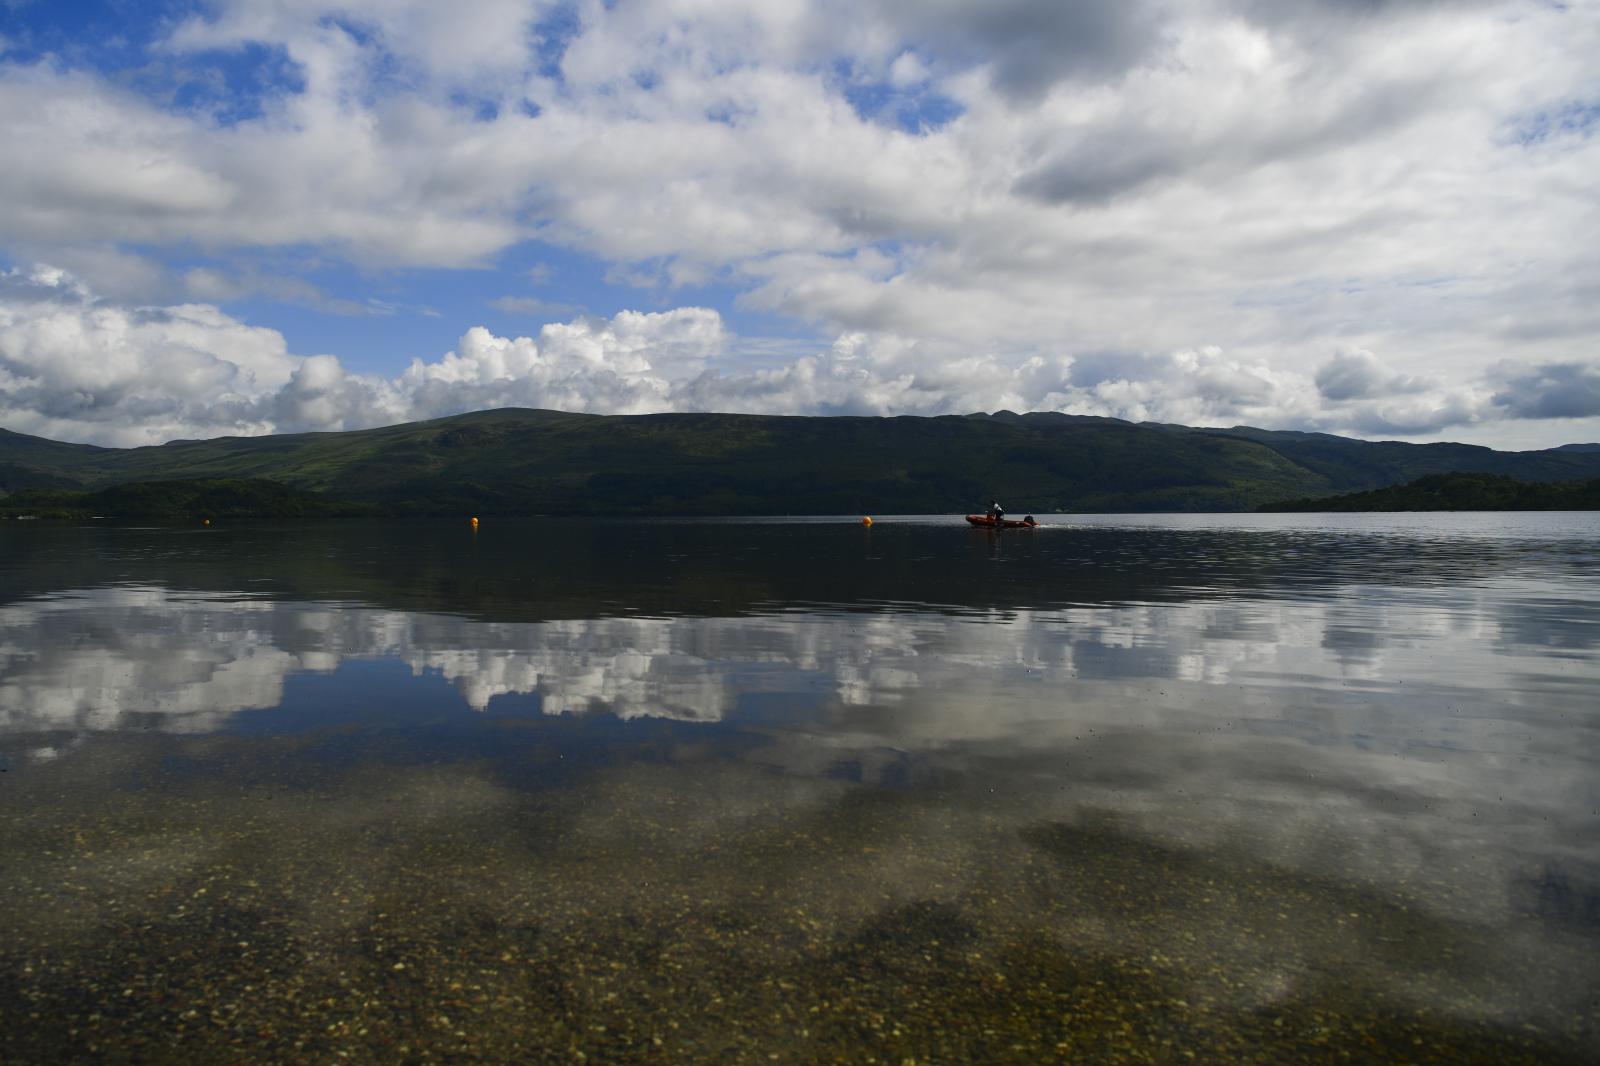 Image from Daily Life UK - Loch Lomond, West coast of Scotland